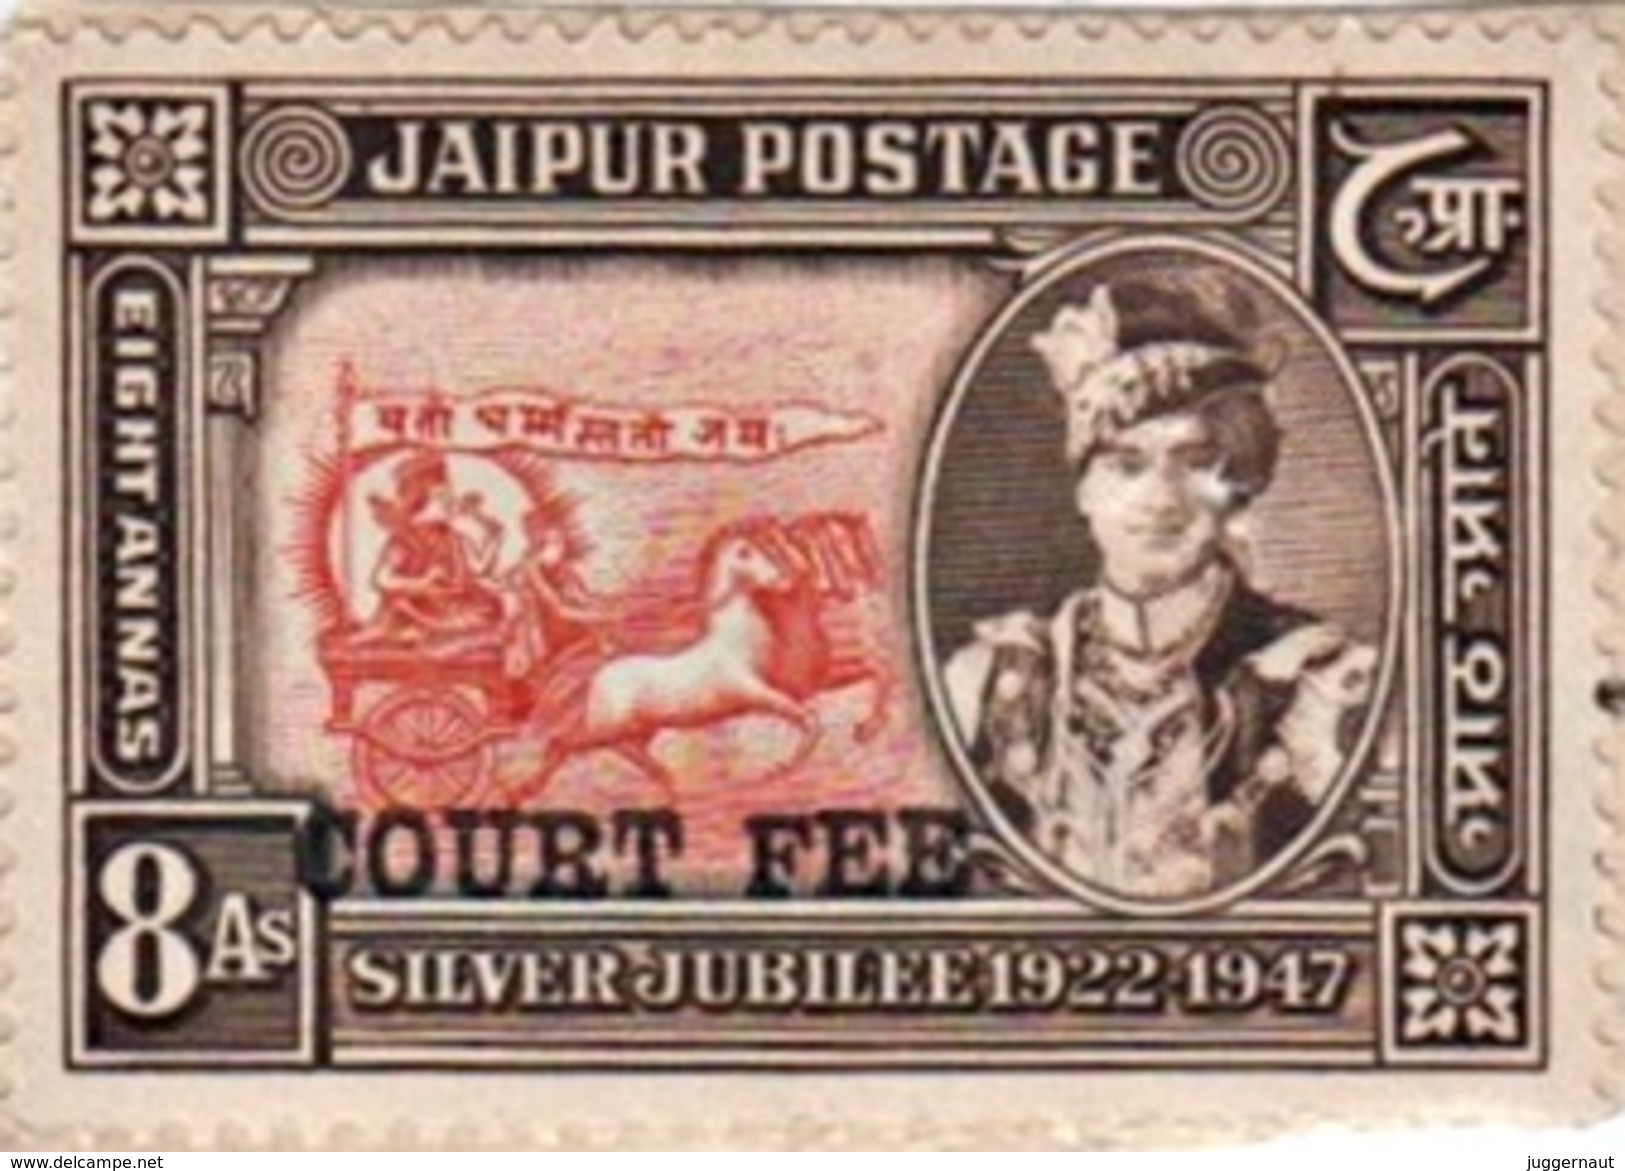 INDIA JAIPUR PRINCELY STATE 8-ANNAS COURT FEE STAMP 1947-1948 GOOD/USED - Jaipur